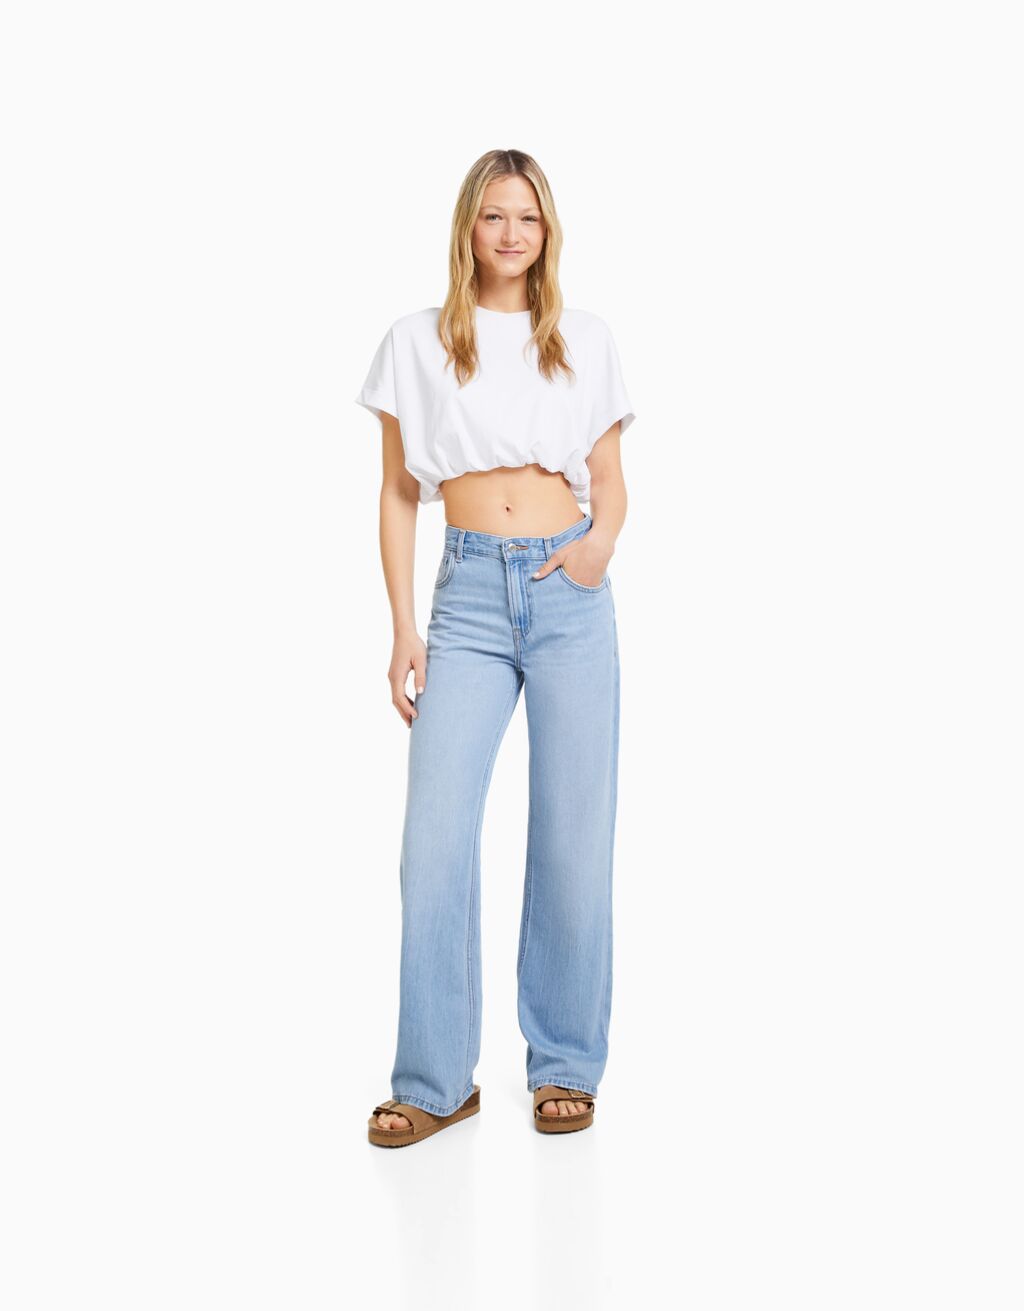 Wide-leg '90s jeans